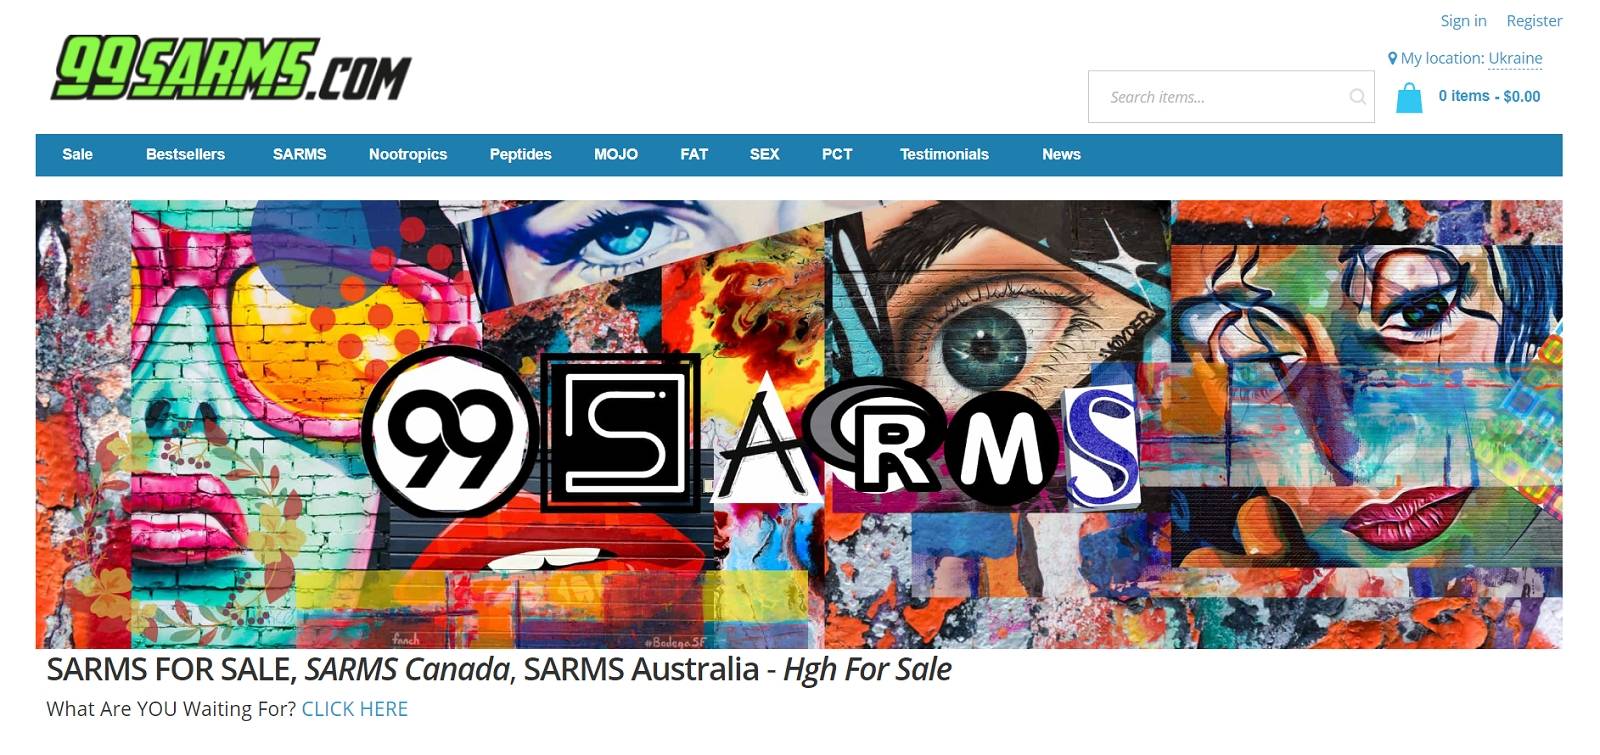 99 SARMS